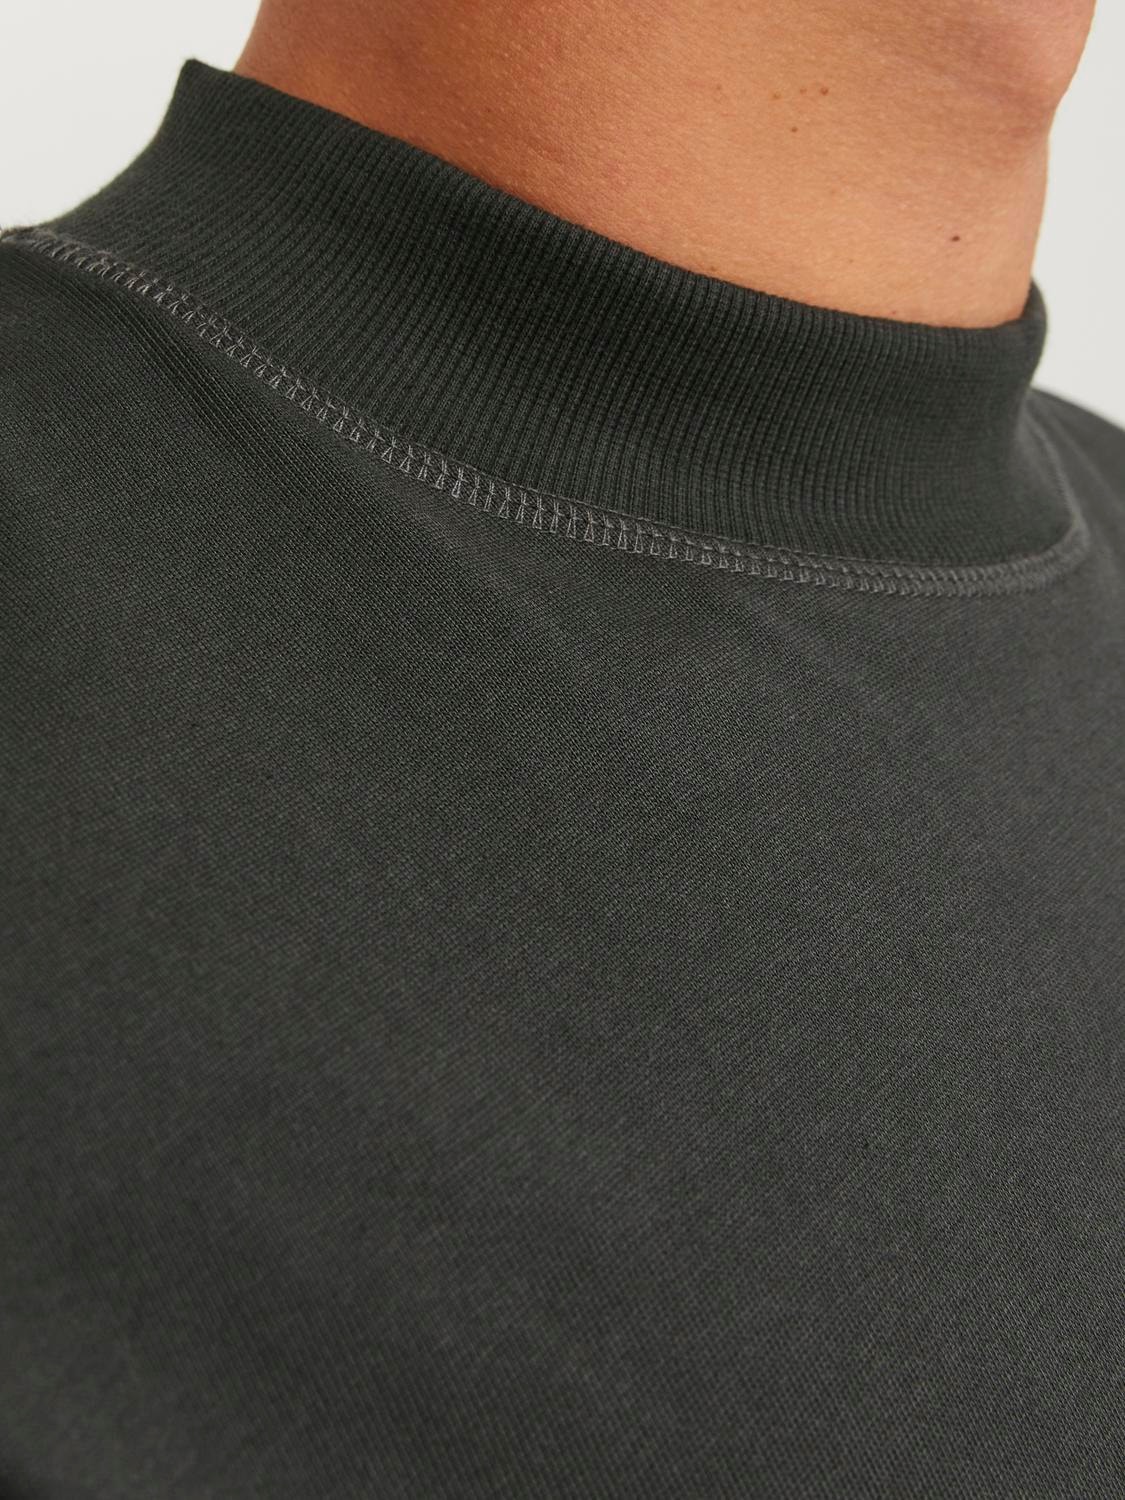 Jack & Jones Plain Crew neck Sweatshirt -Black Sand - 12247596